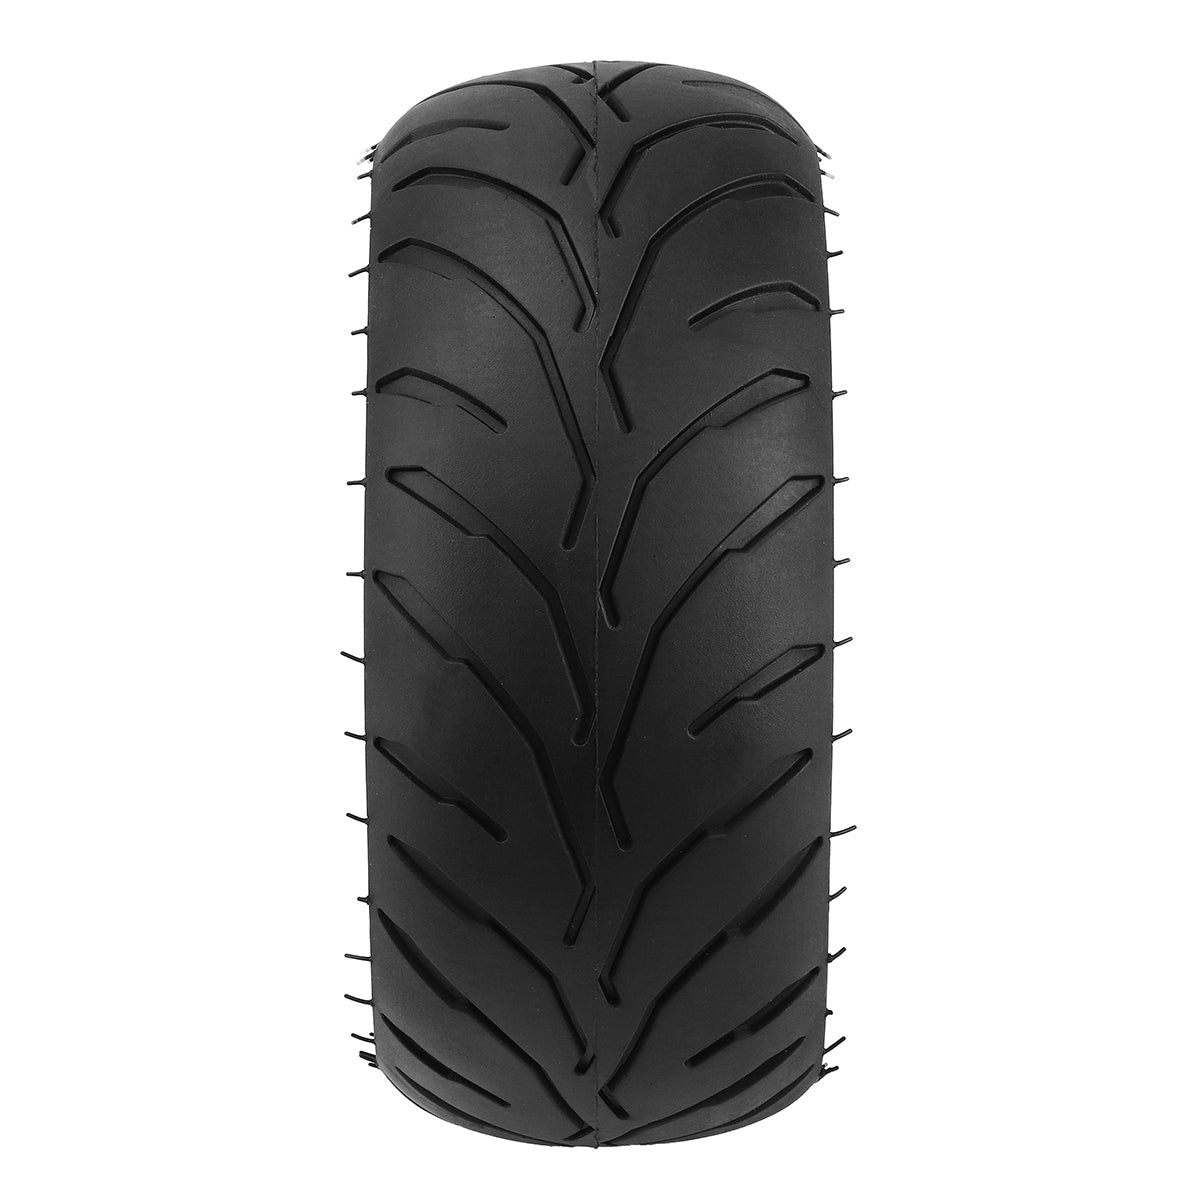 Dark Slate Gray 47cc 49cc Mini Pocket Bike Tire + Inner Tube 110/50-6.5 90/65-6.5 Front/Rear